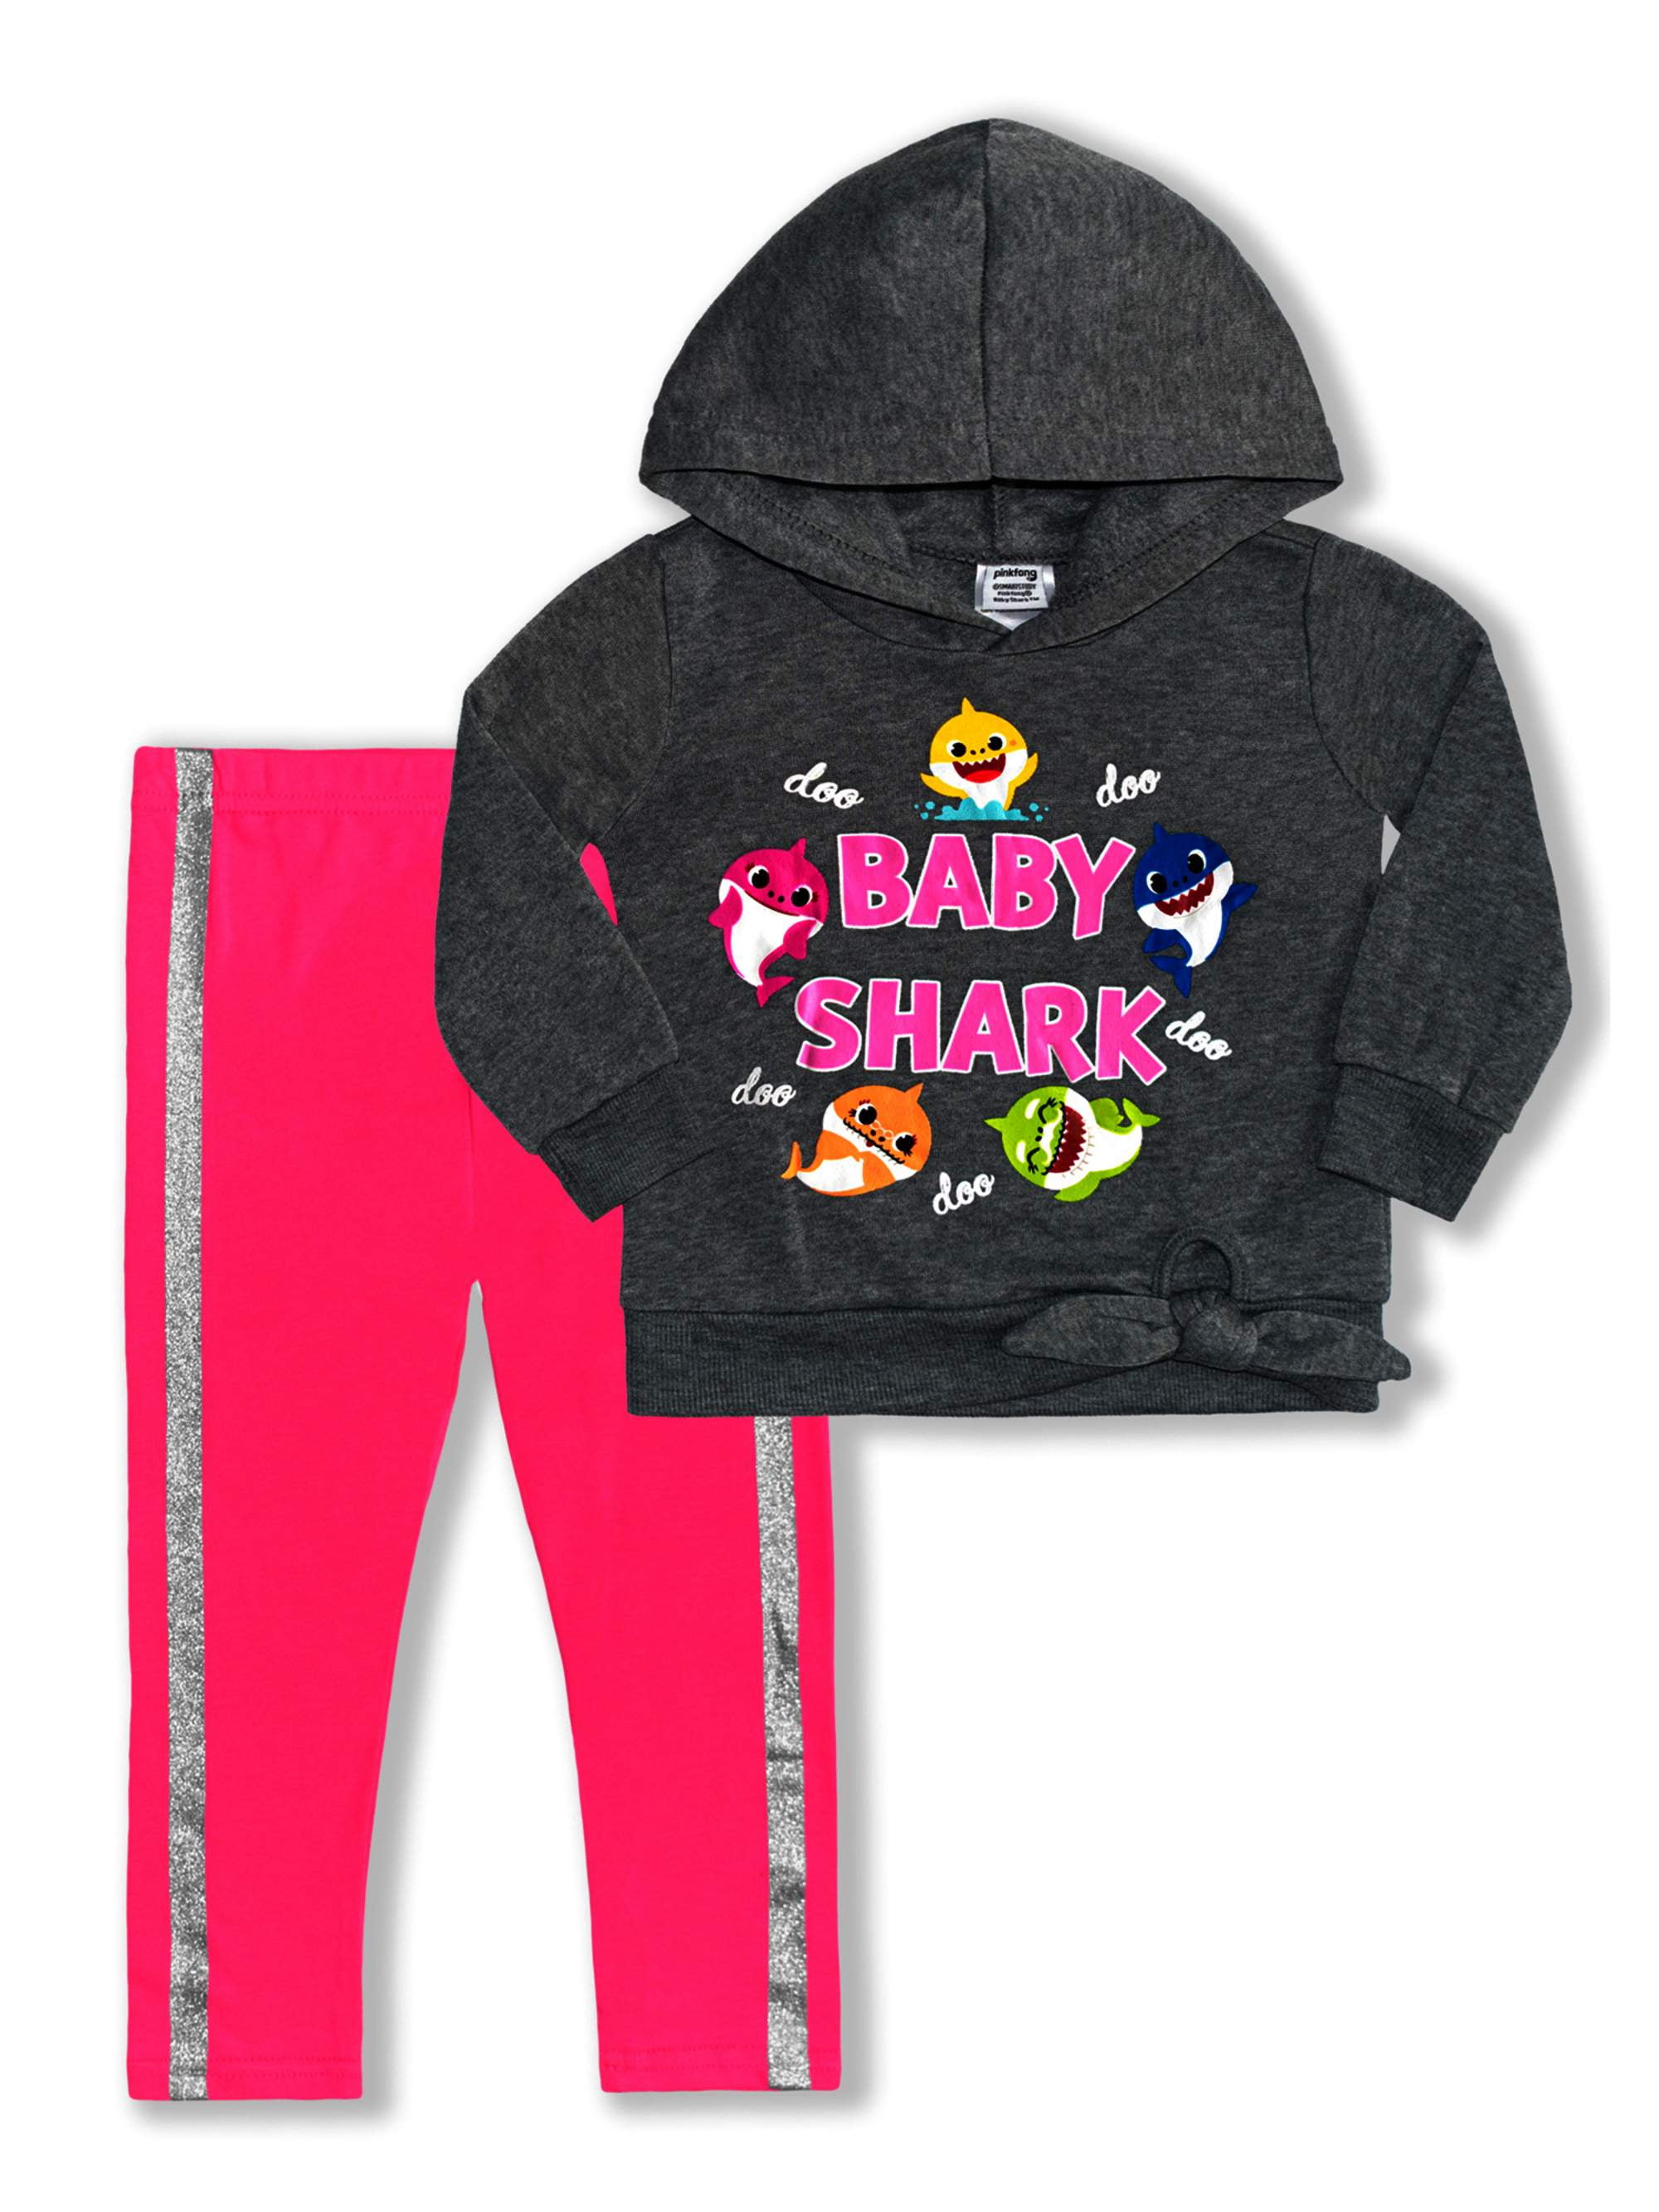 Baby Shark and Paw Patrol Nickelodeon Baby Boys’ Playwear Fleece Sweatsuit Set 2T-7 